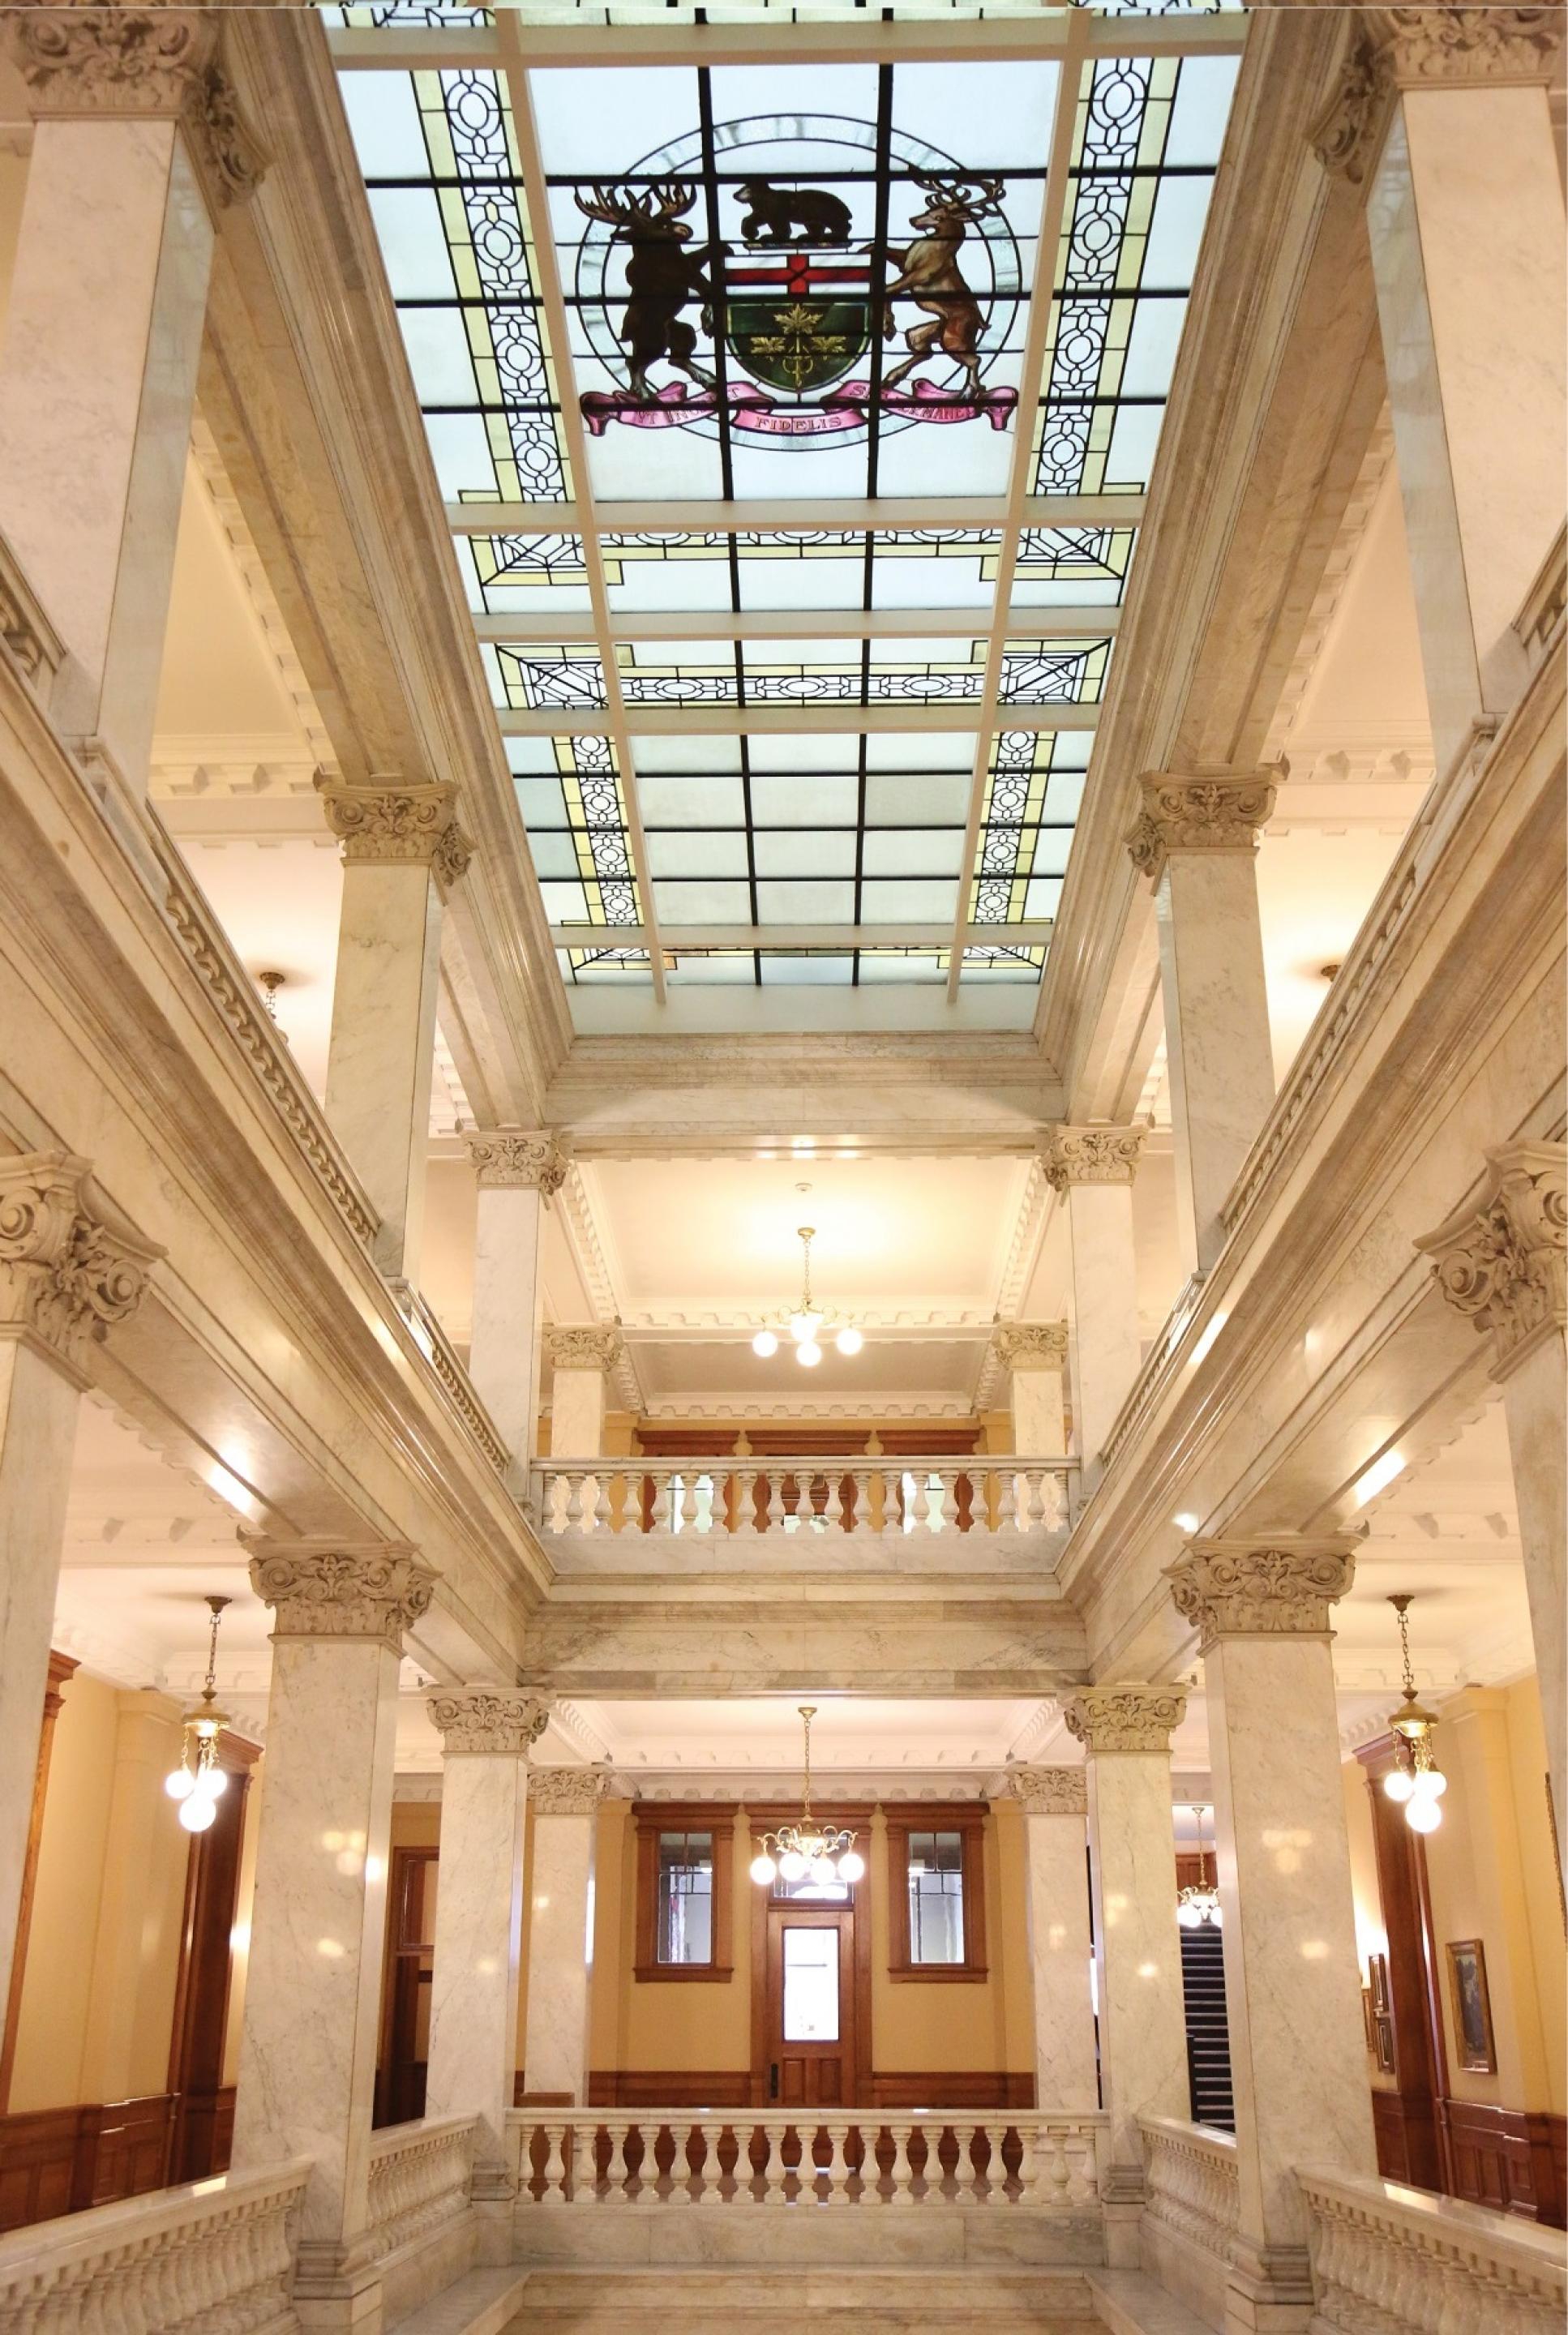 Picture of the west wing interior at Ontario's Legislative Building